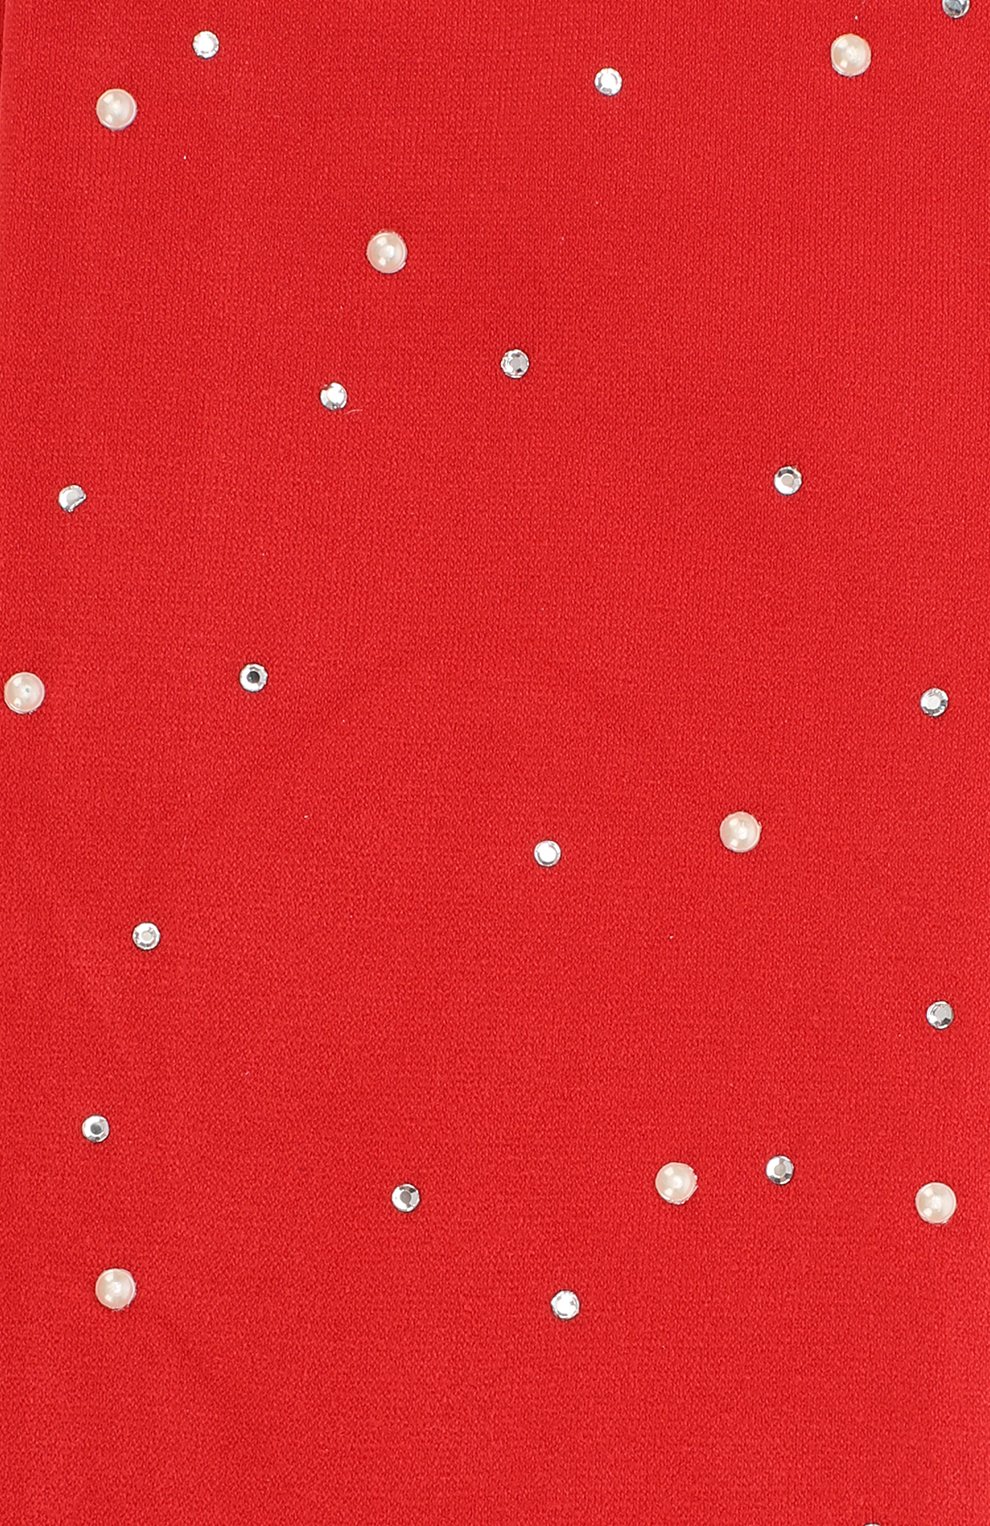 Детские колготки со стразами LA PERLA красного цвета, арт. 48046/4-6 | Фото 2 (Материал: Текстиль, Синтетический материал; Статус проверки: Проверено, Проверена категория)